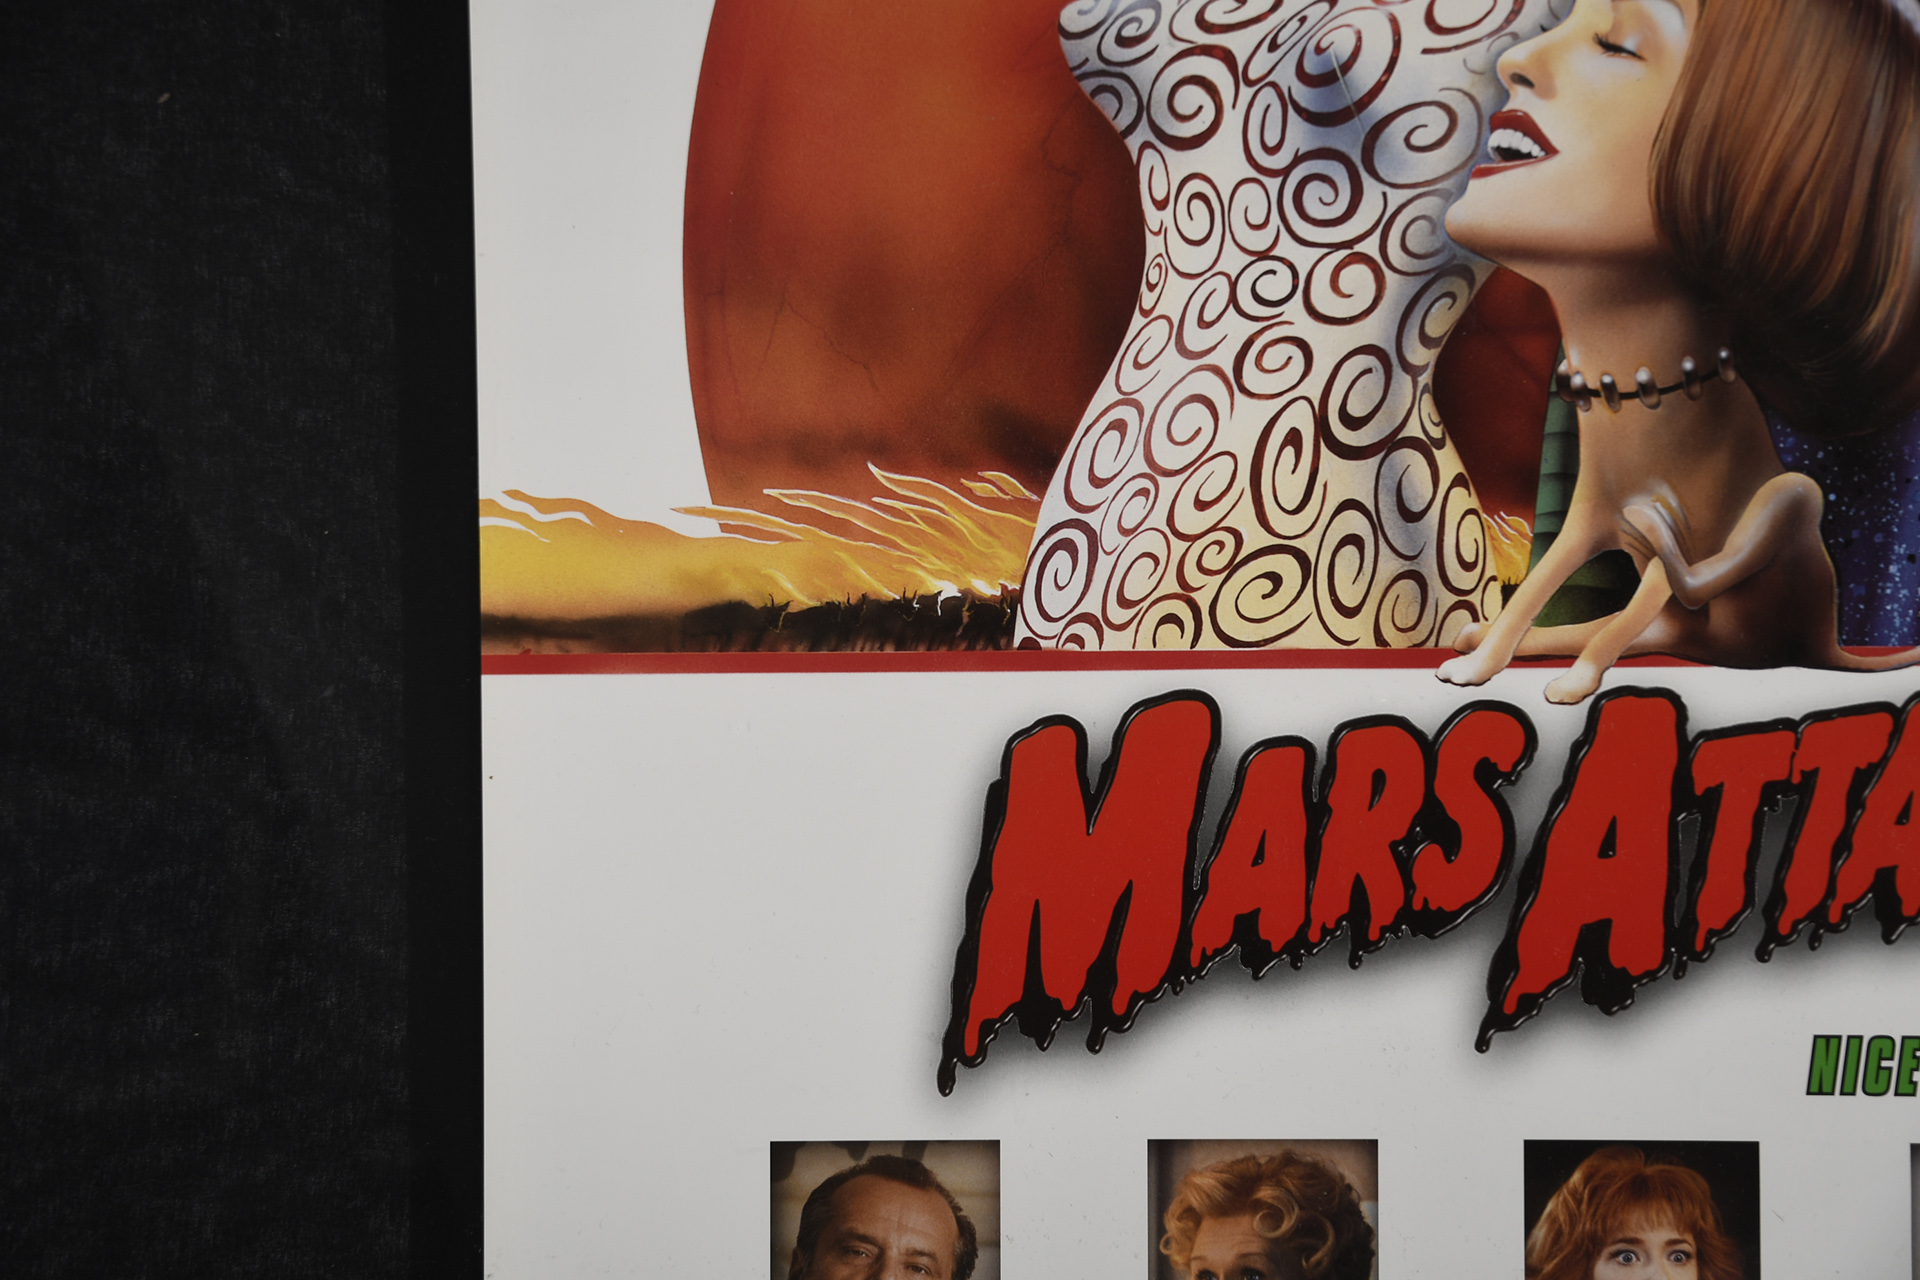 Mars Attacks!"" Cinema Poster - Image 9 of 10